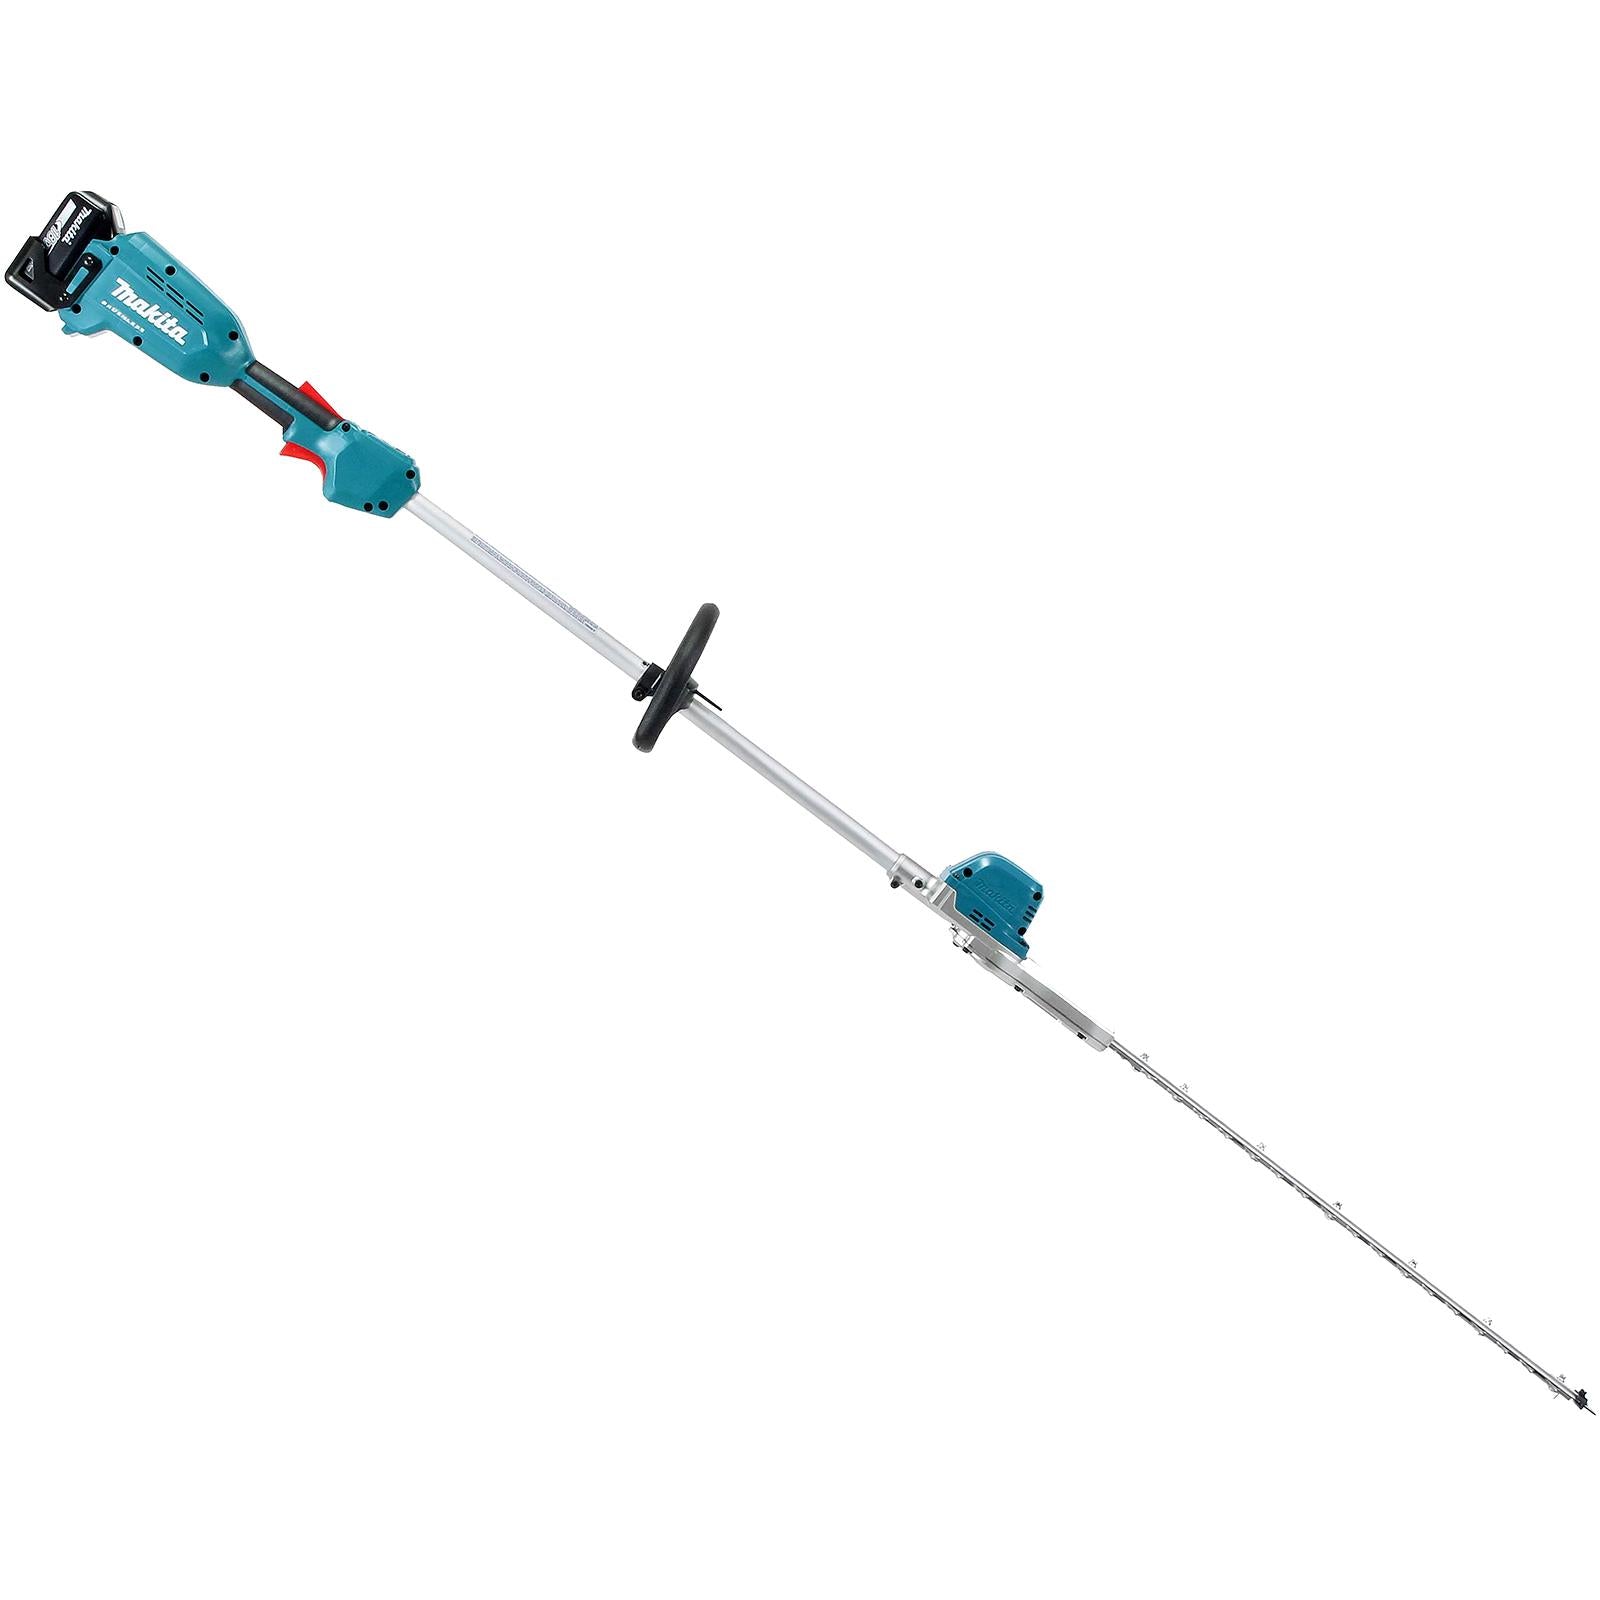 Makita Pole Hedge Trimmer Kit 60cm 18V LXT Li-ion Brushless Cordless 2 x 5Ah Battery and Charger Garden Bush Cutter Cutting DUN600LRTE